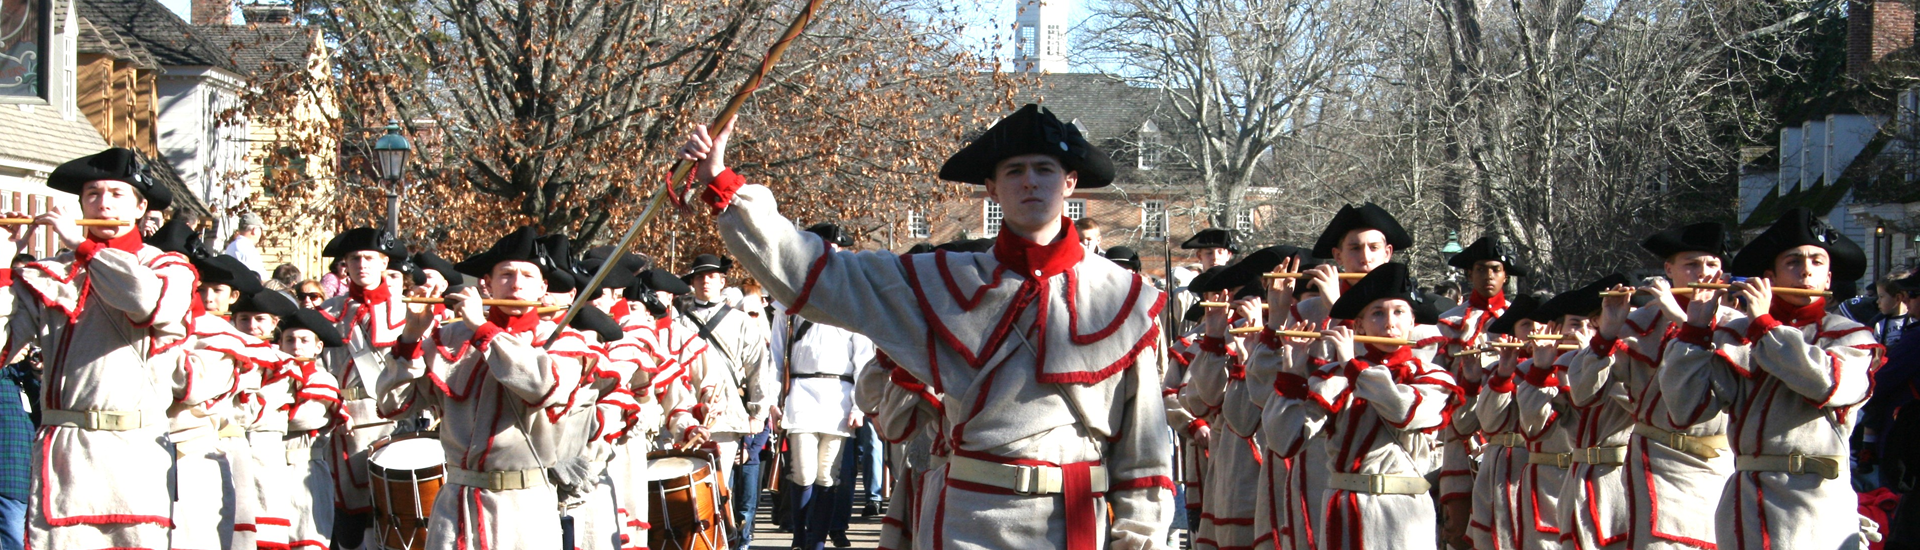 Minutemen reenactment marching in parade in full dress